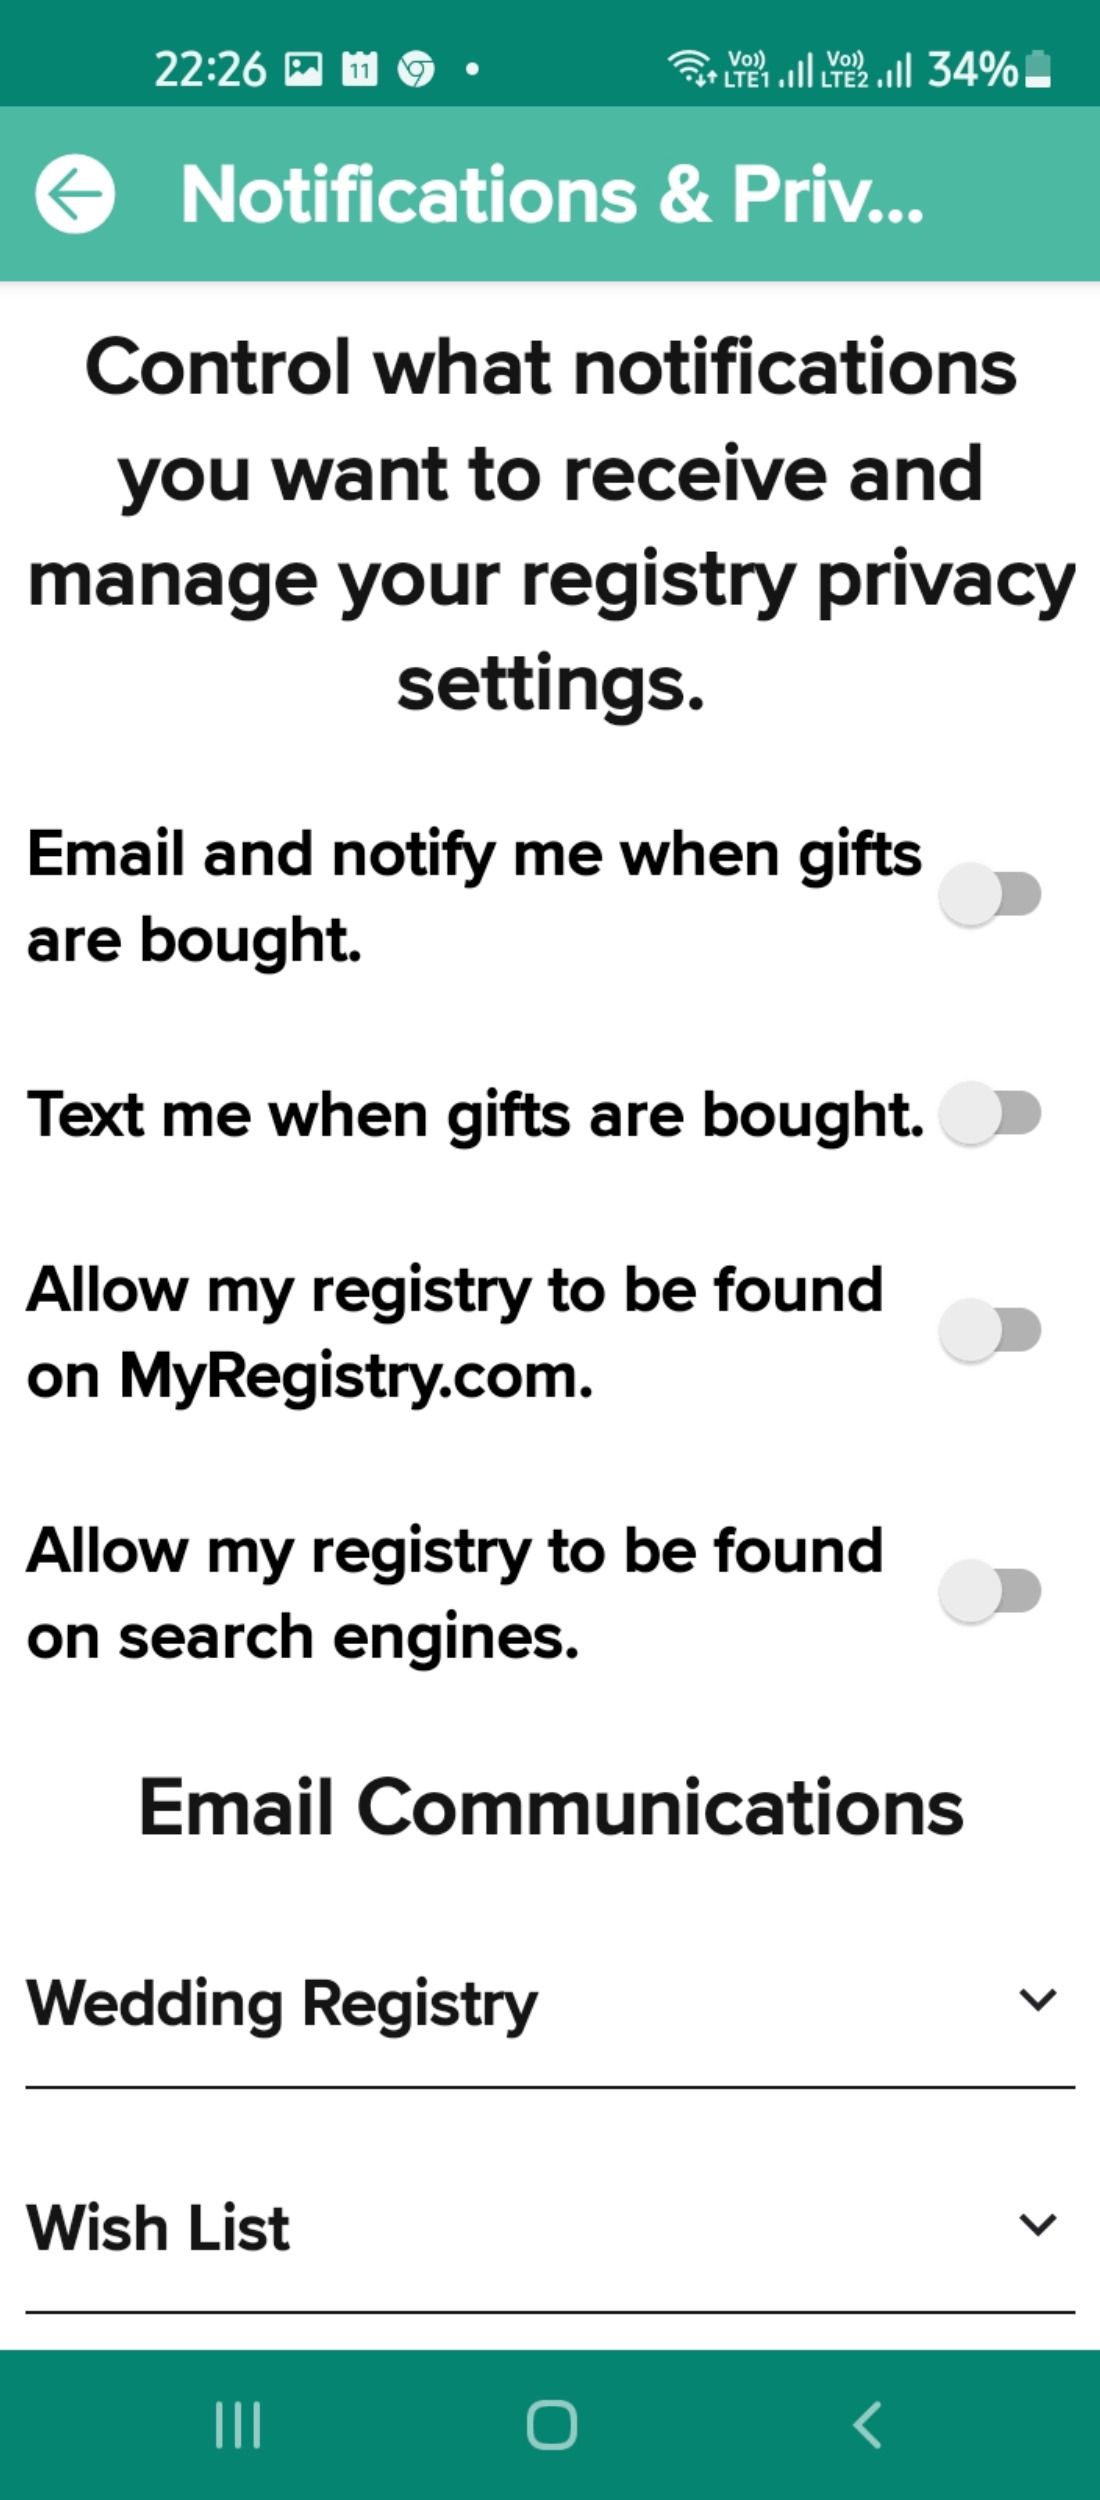 Notifications and alert settings in MyRegistry